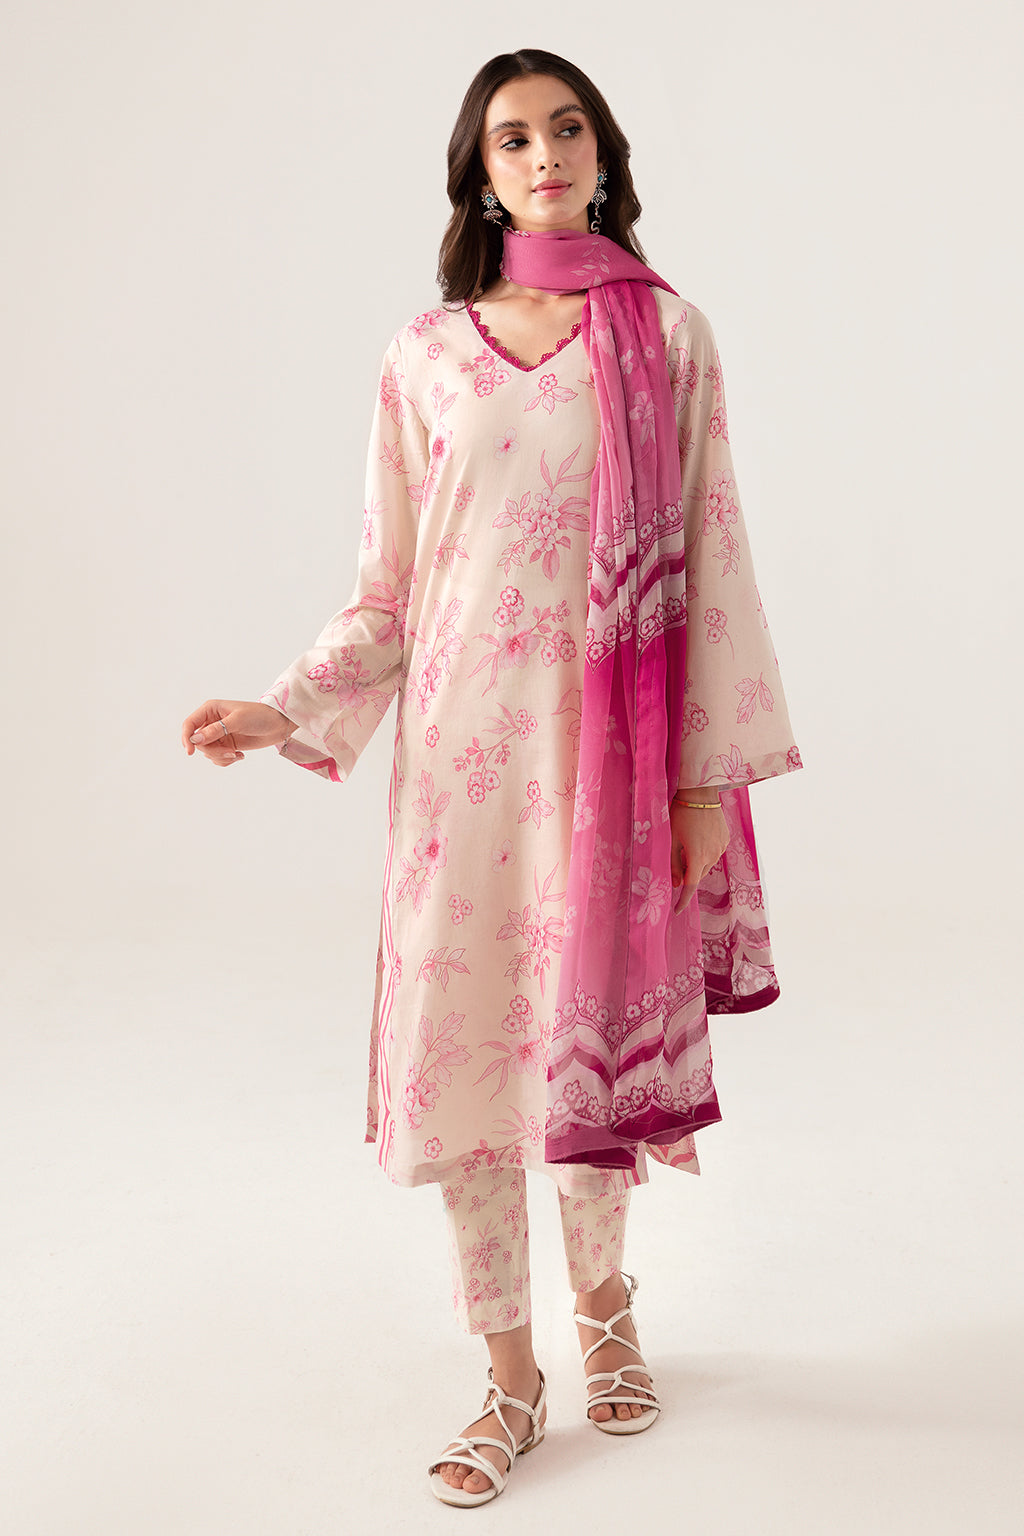 Ramsha | Pinted Lawn | RP-105 - Khanumjan  Pakistani Clothes and Designer Dresses in UK, USA 